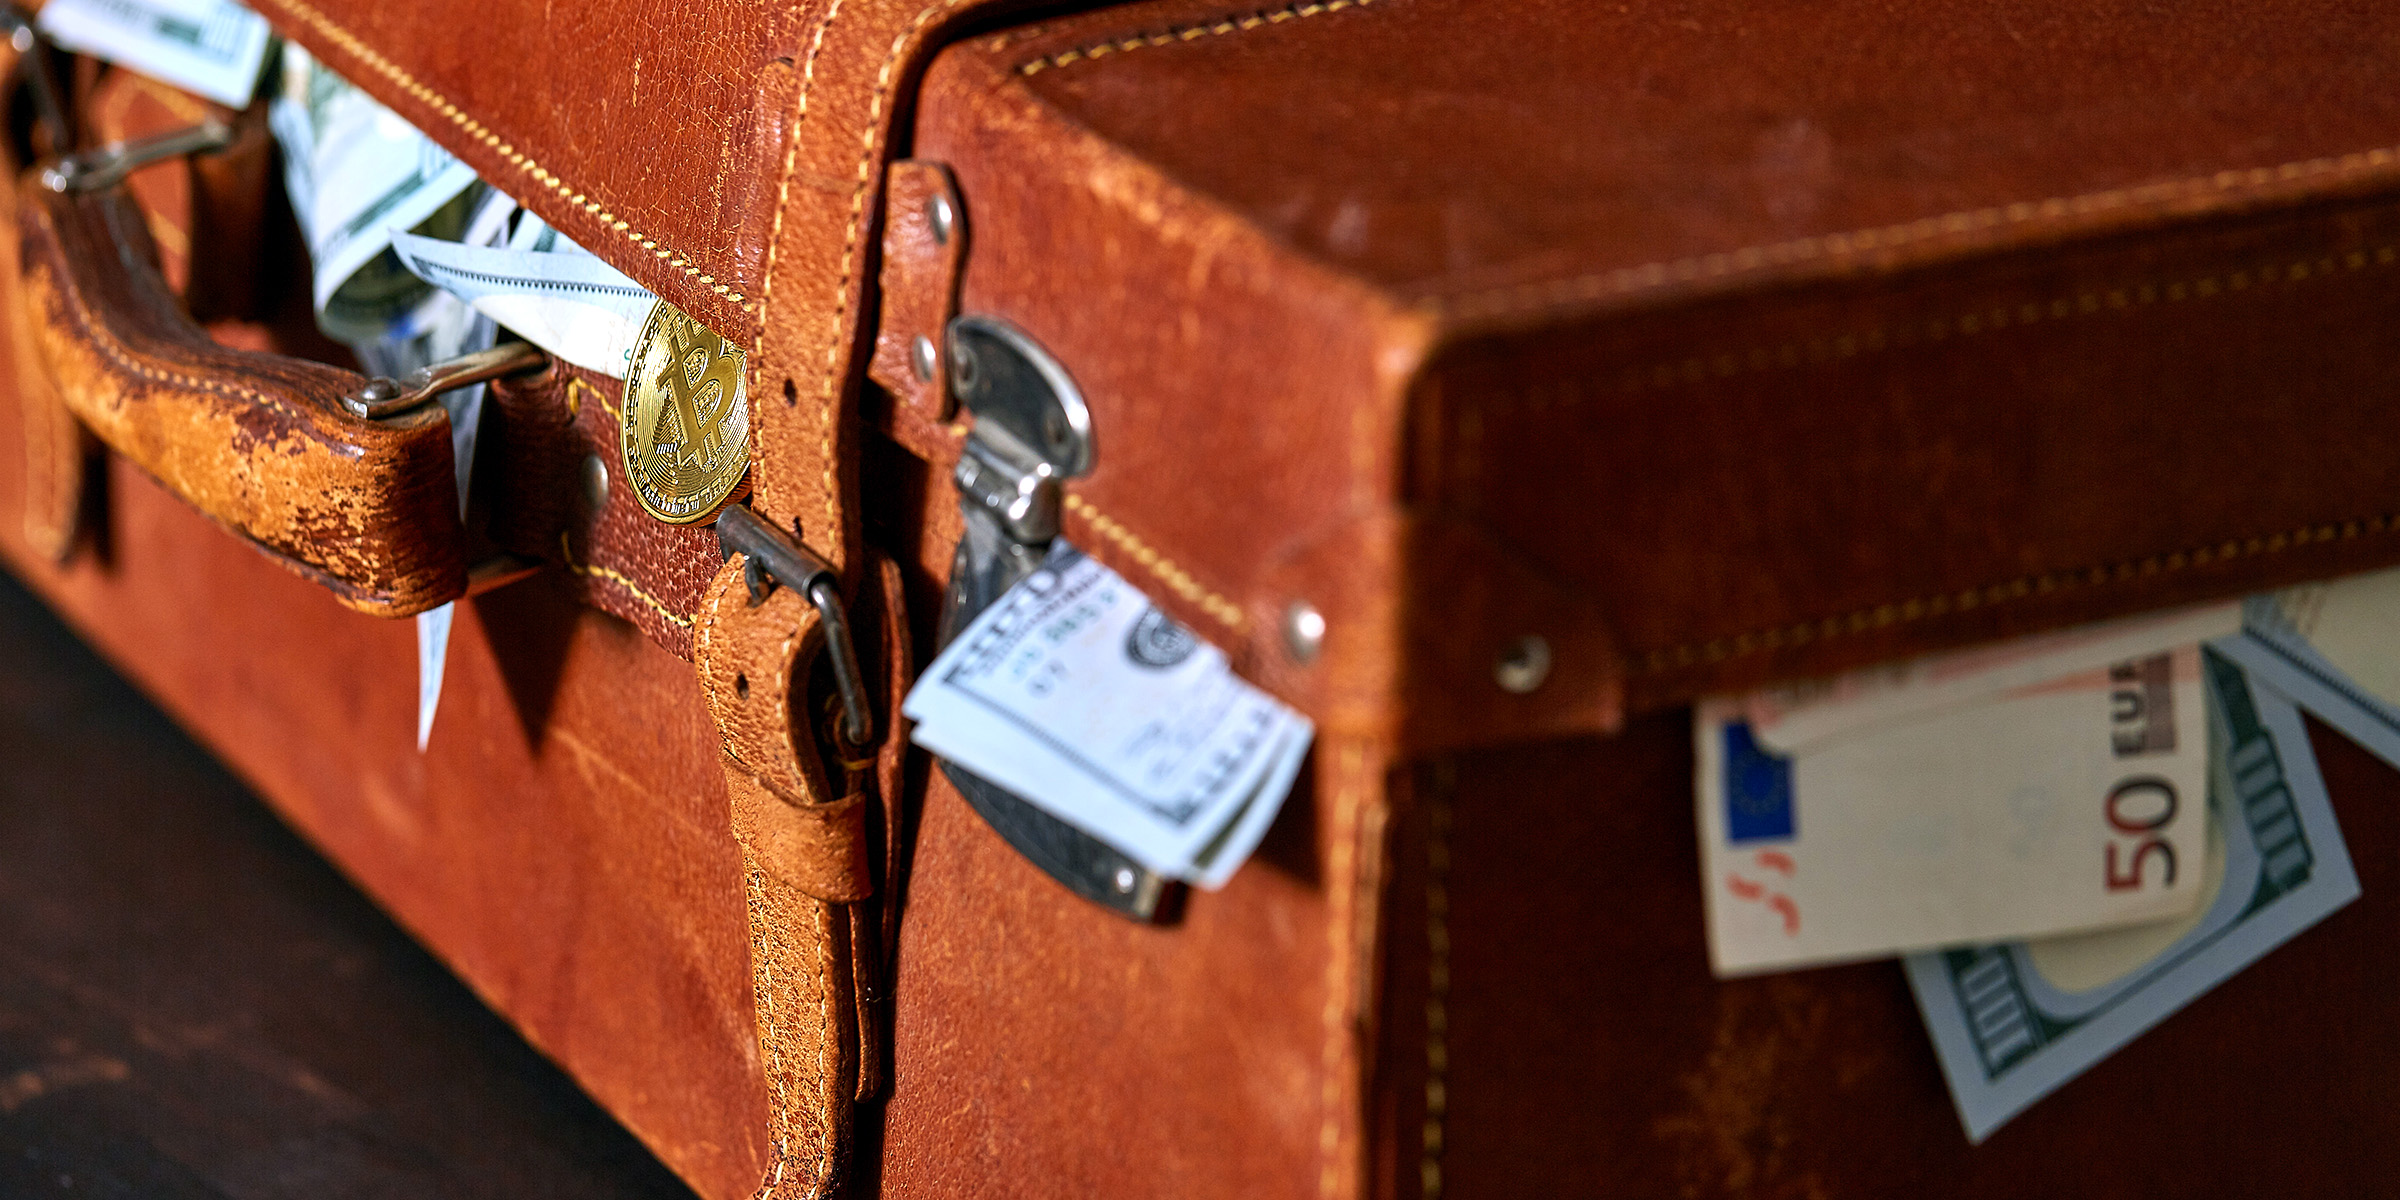 Une valise pleine d'argent | Source : Shutterstock